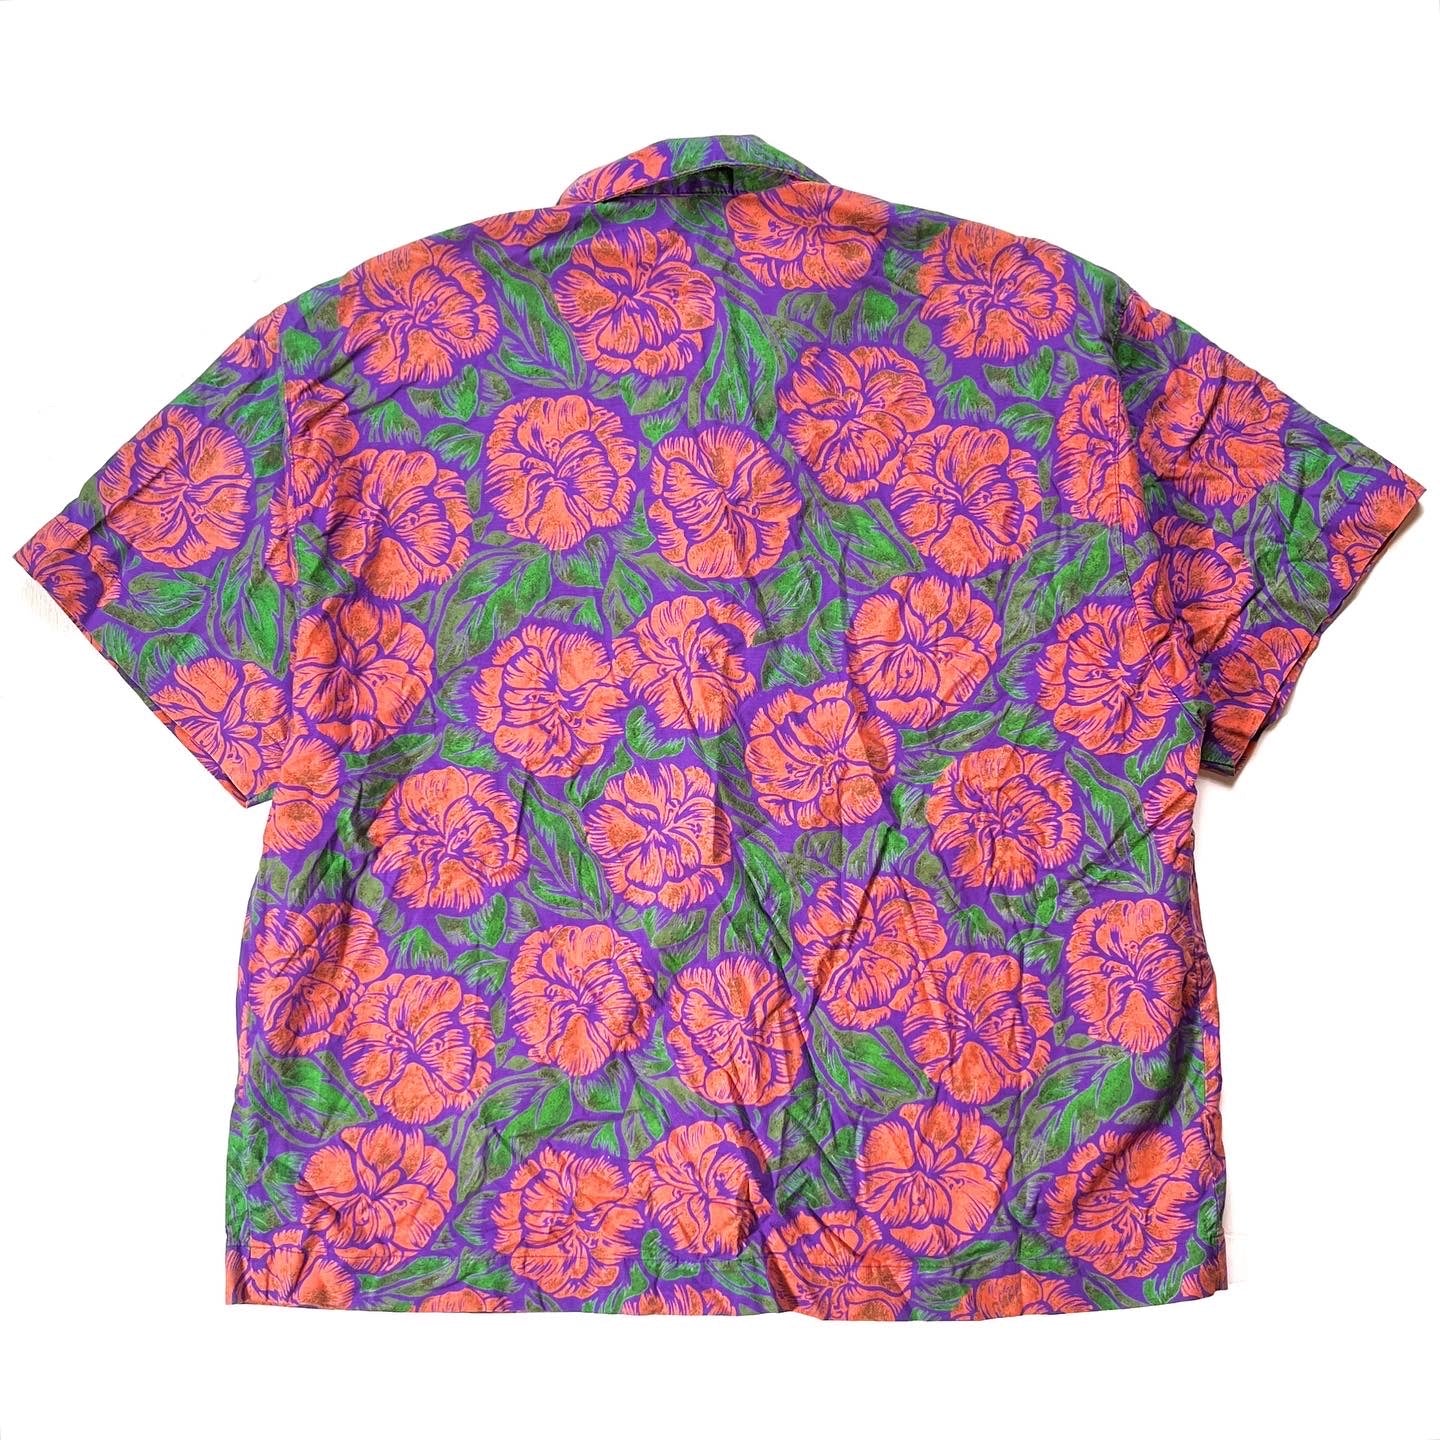 1991 Patagonia Womens Cotton A/C Print Shirt, Floral Print (M-L)